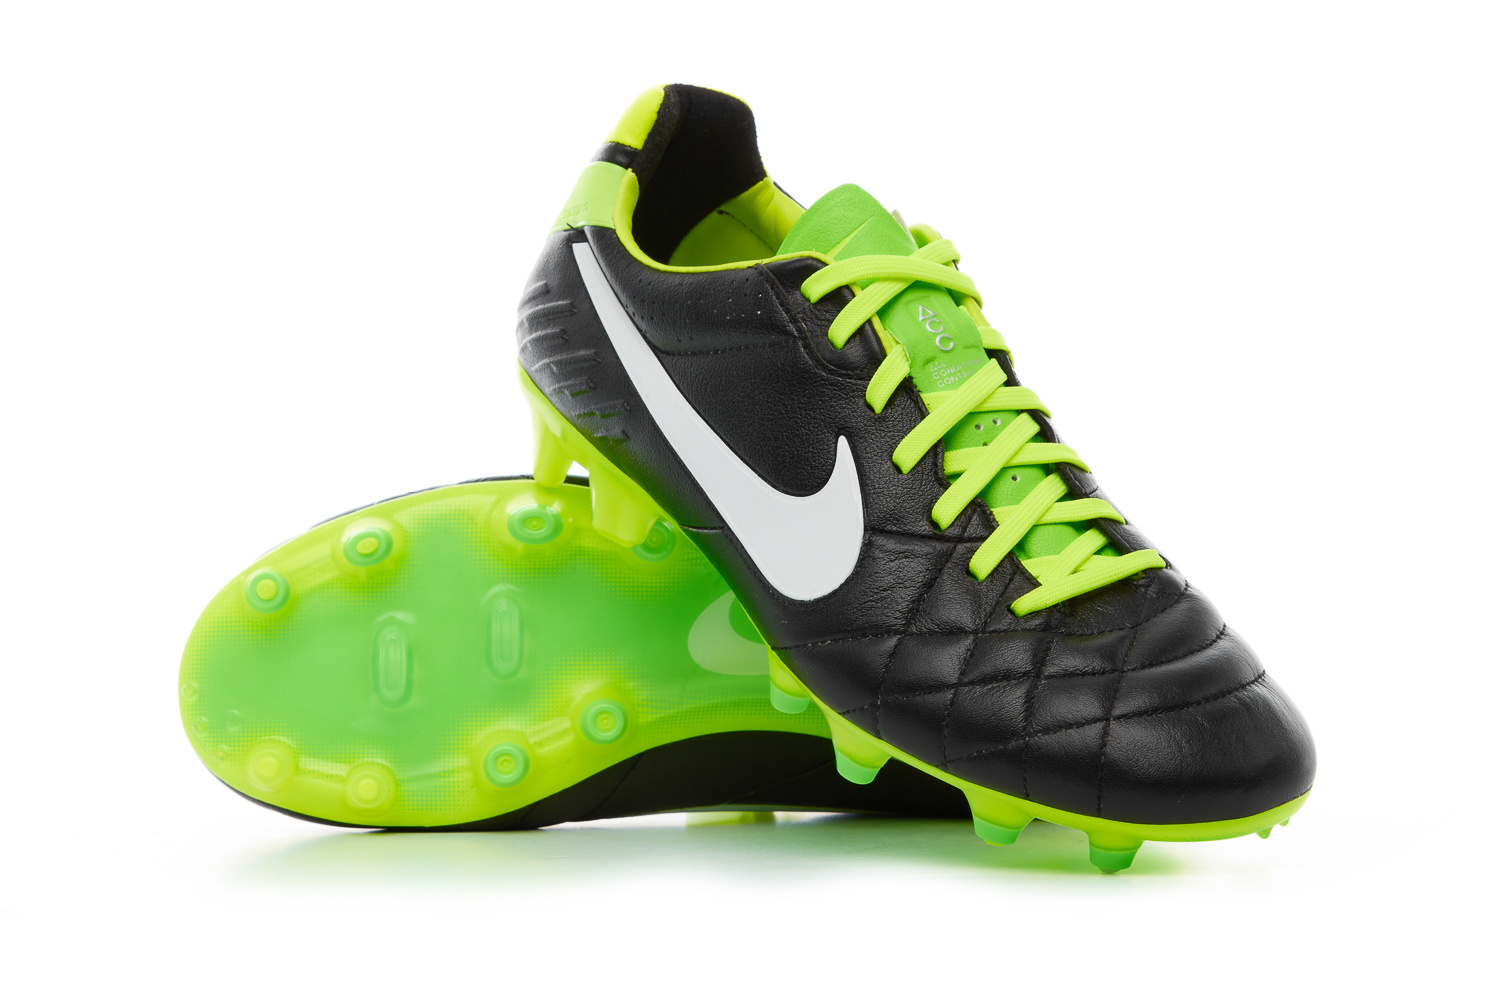 Sandalias falta de aliento Rodeado 2013 Nike Tiempo Legend IV Football Boots *As New* FG